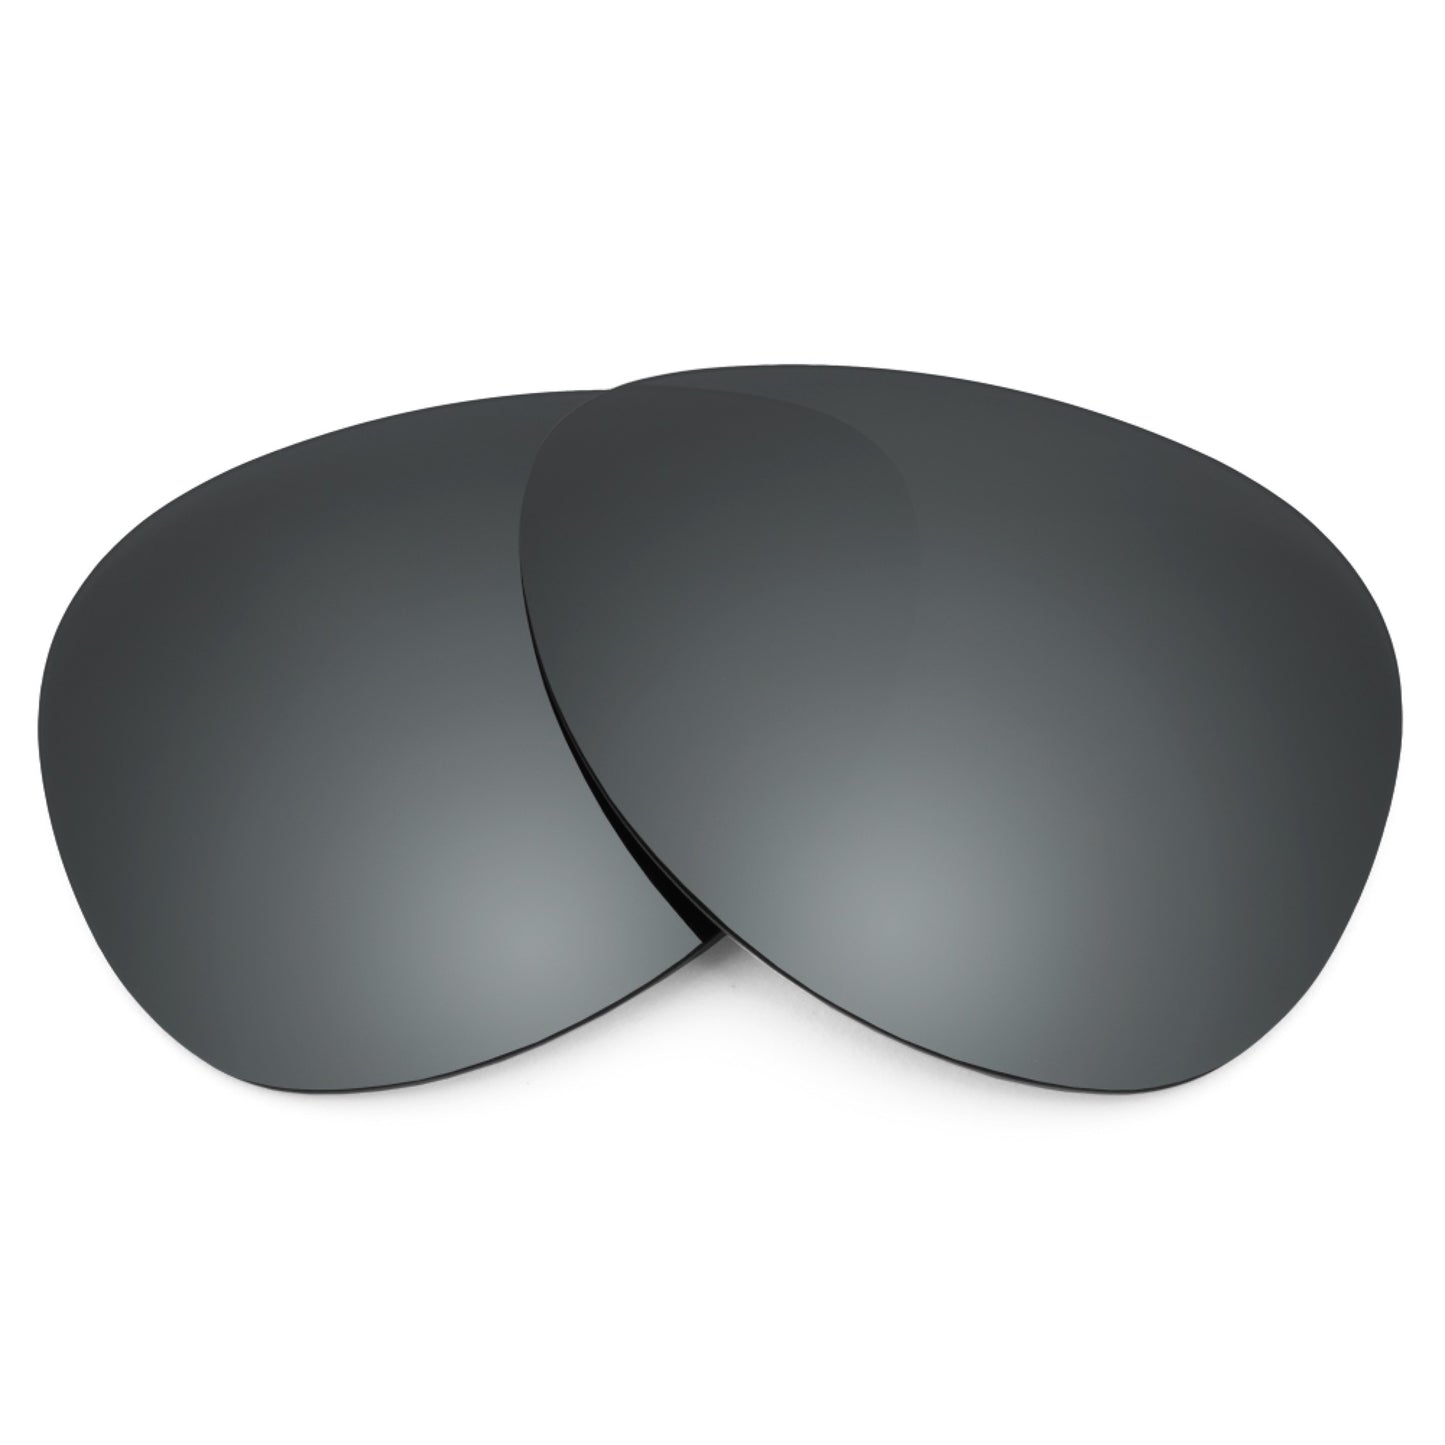 Revant replacement lenses for Ray-Ban RB3386 67mm Elite Polarized Black Chrome